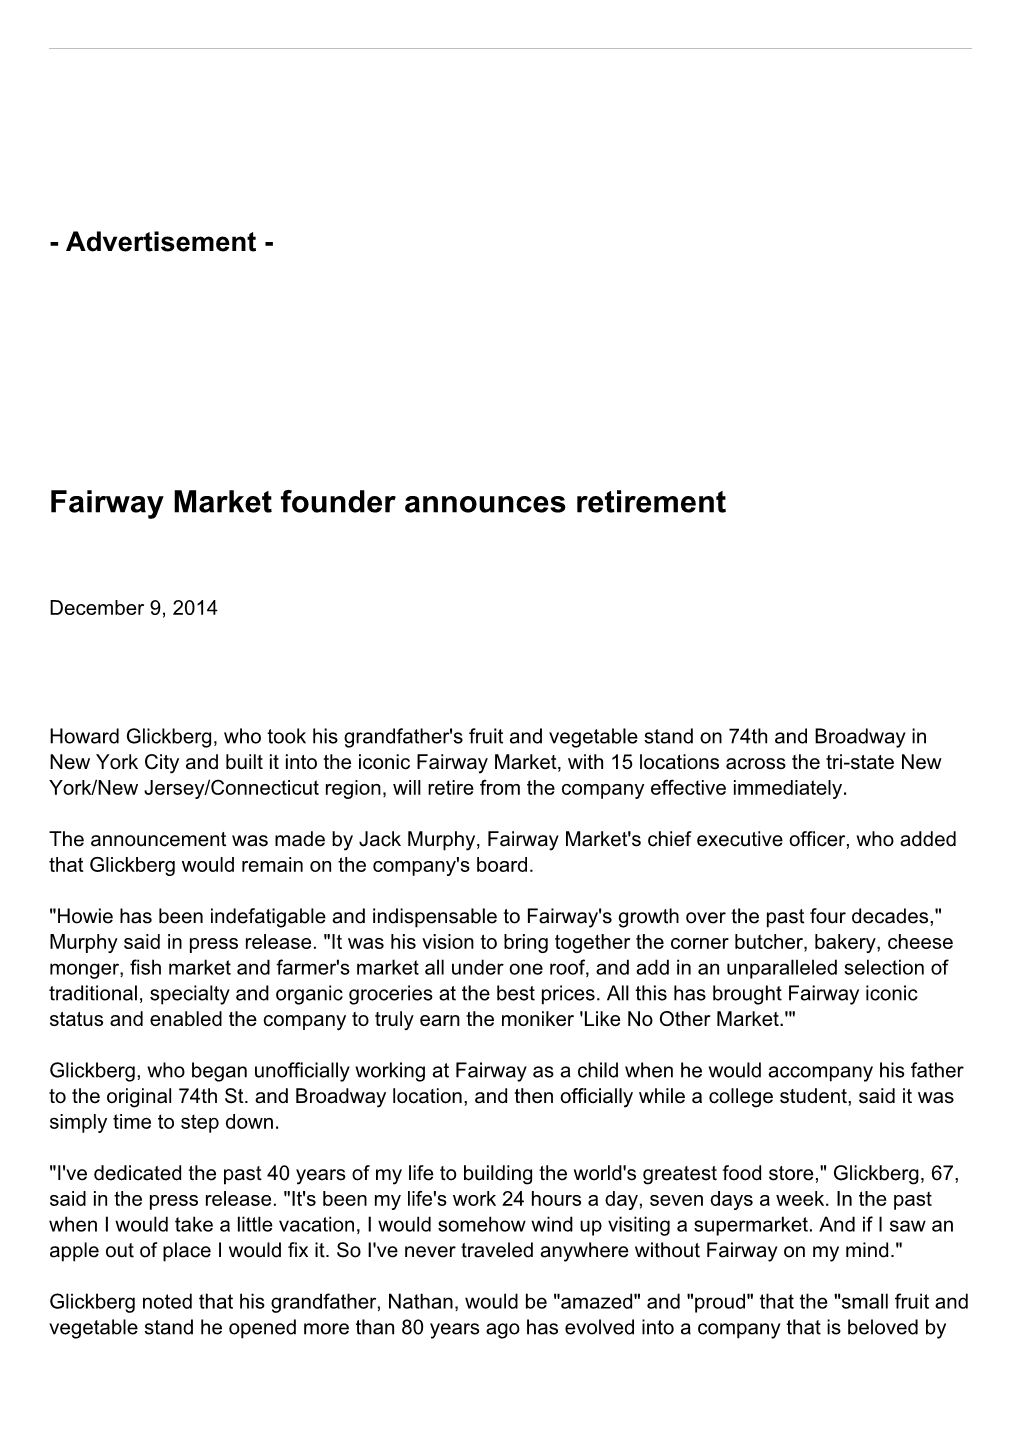 Fairway Market Founder Announces Retirement